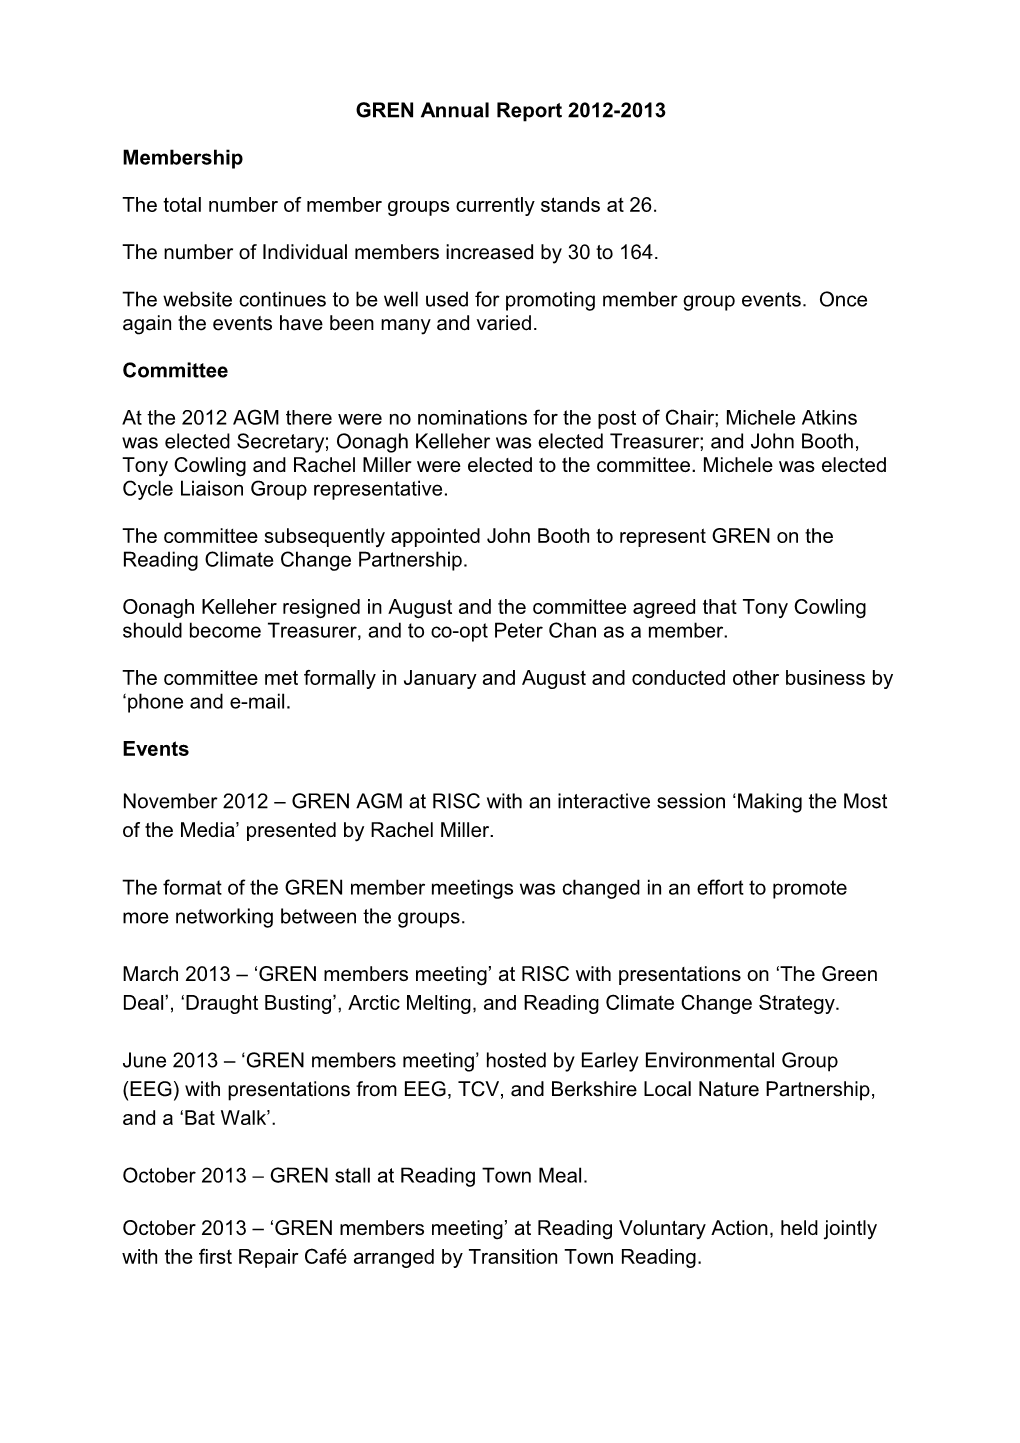 GREN Annual Report 2011-2012